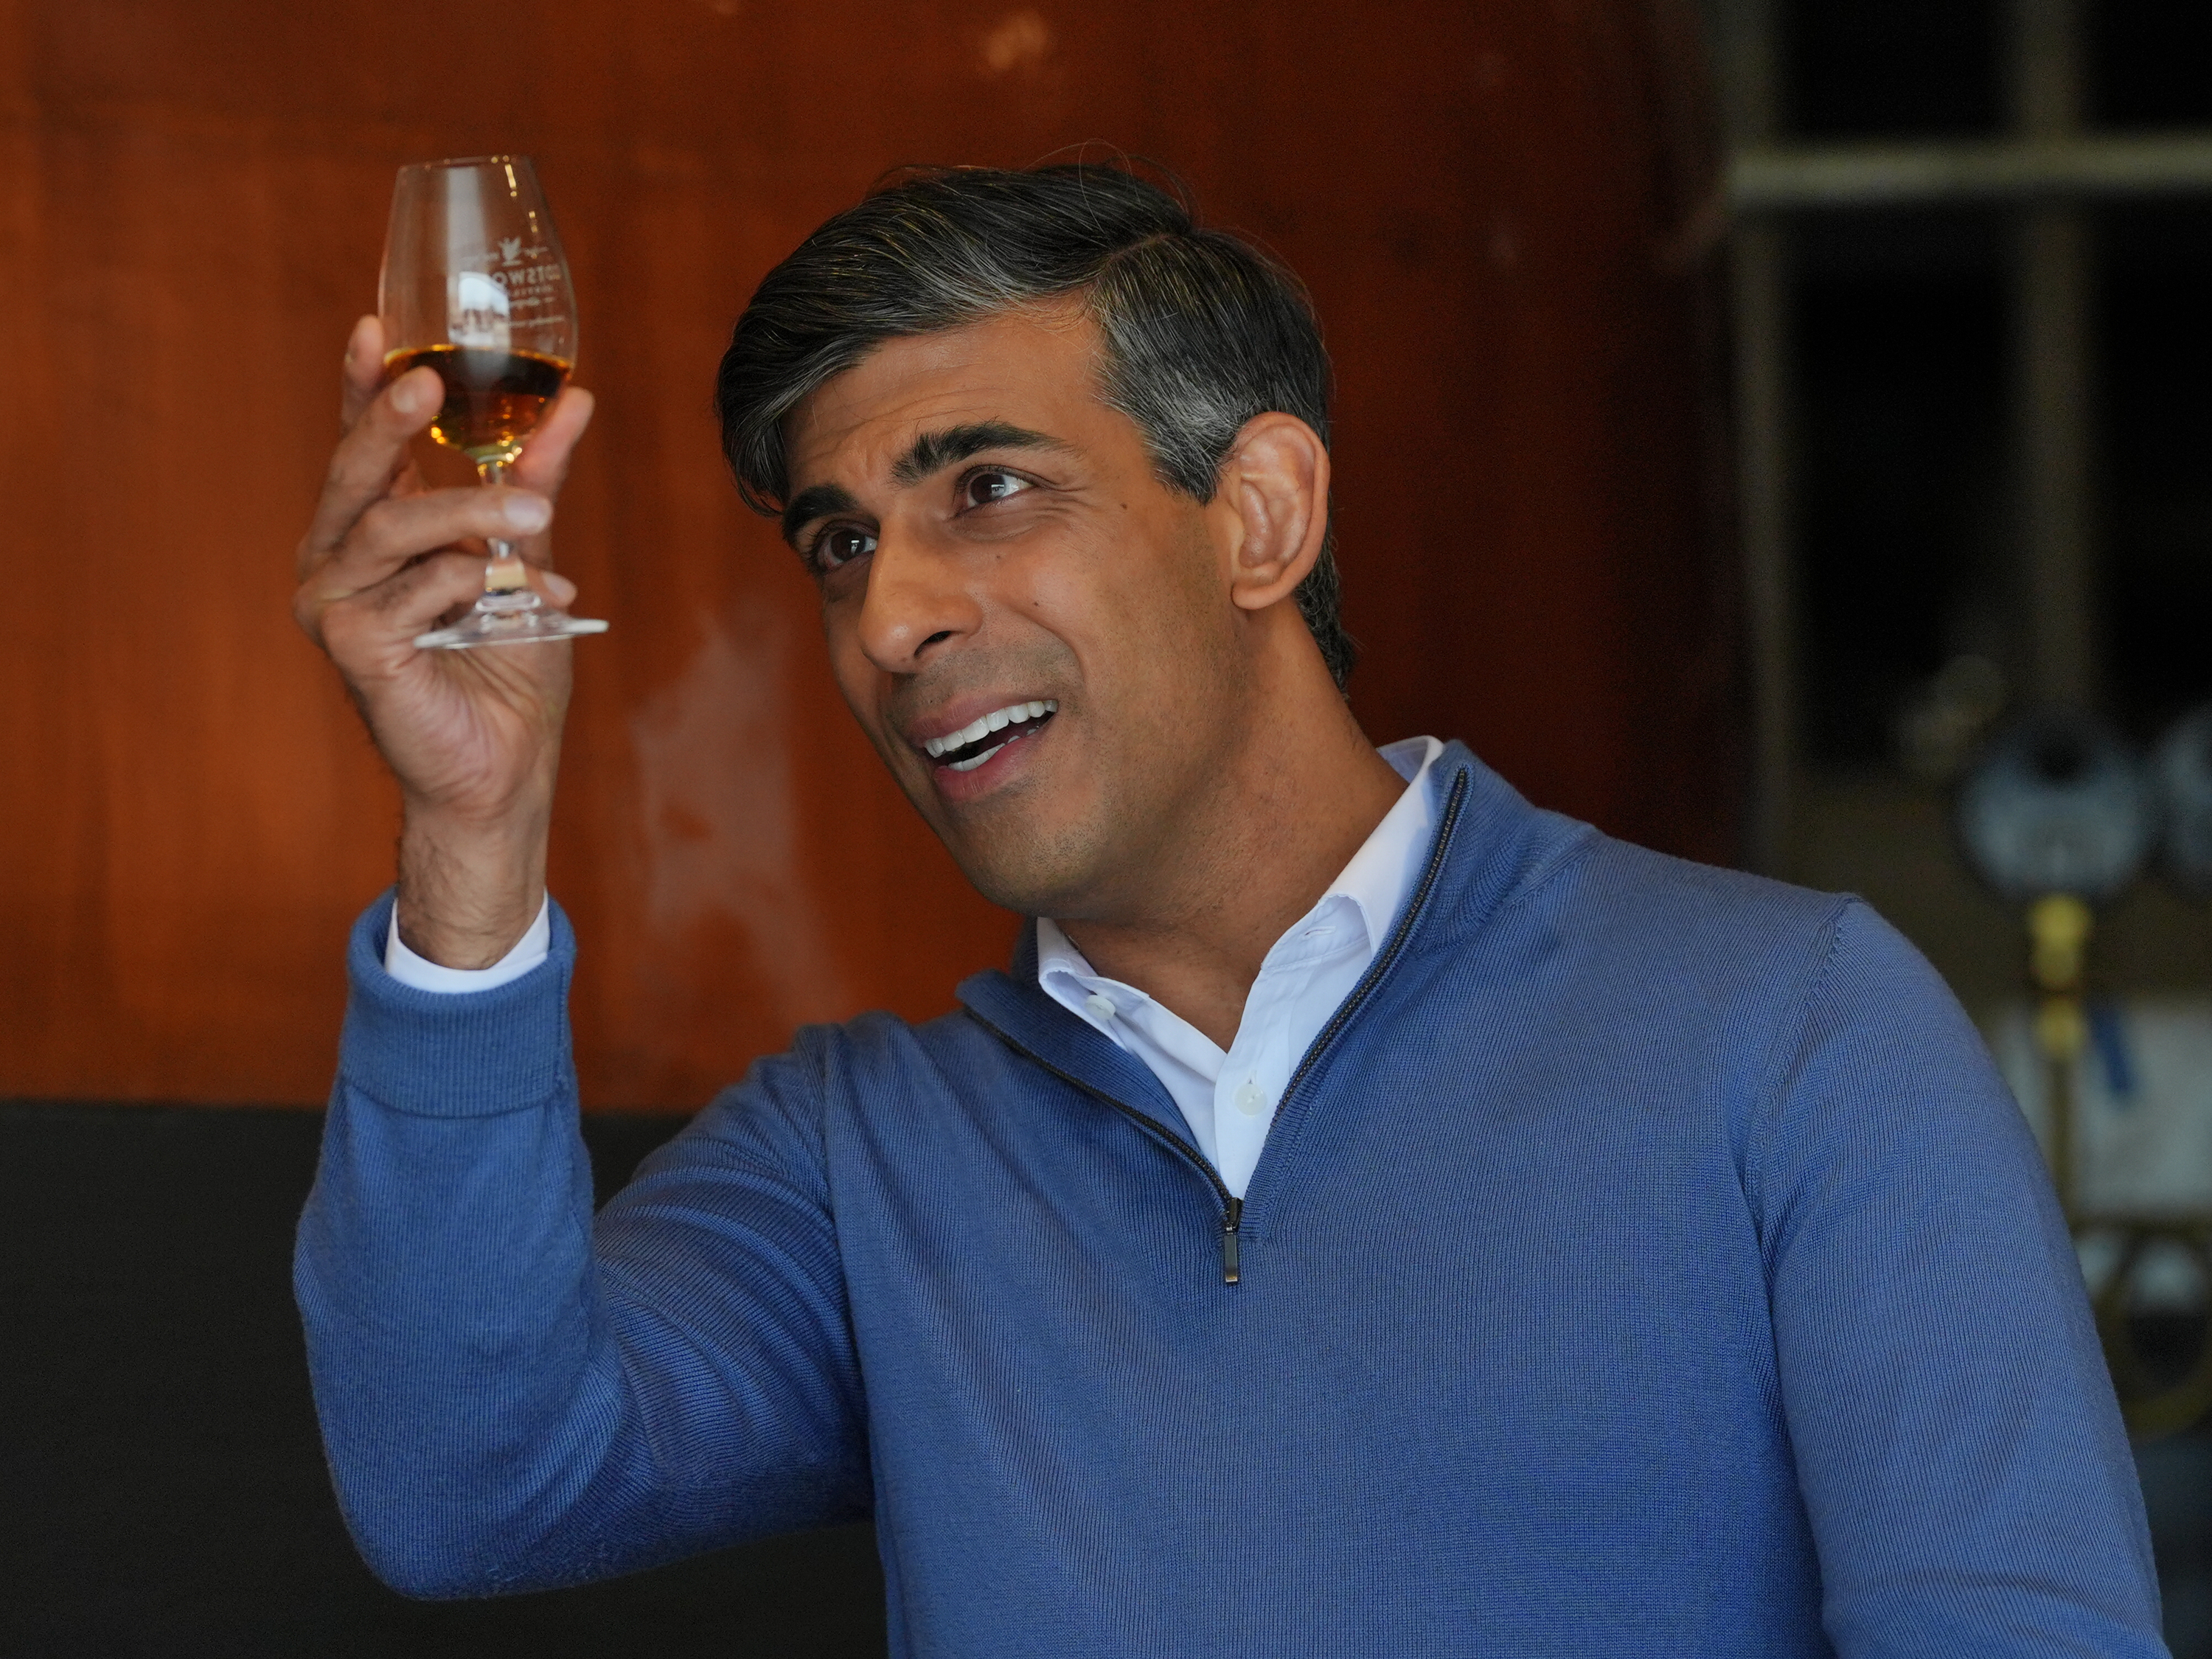 Mr Sunak appreciates a glass of whisky